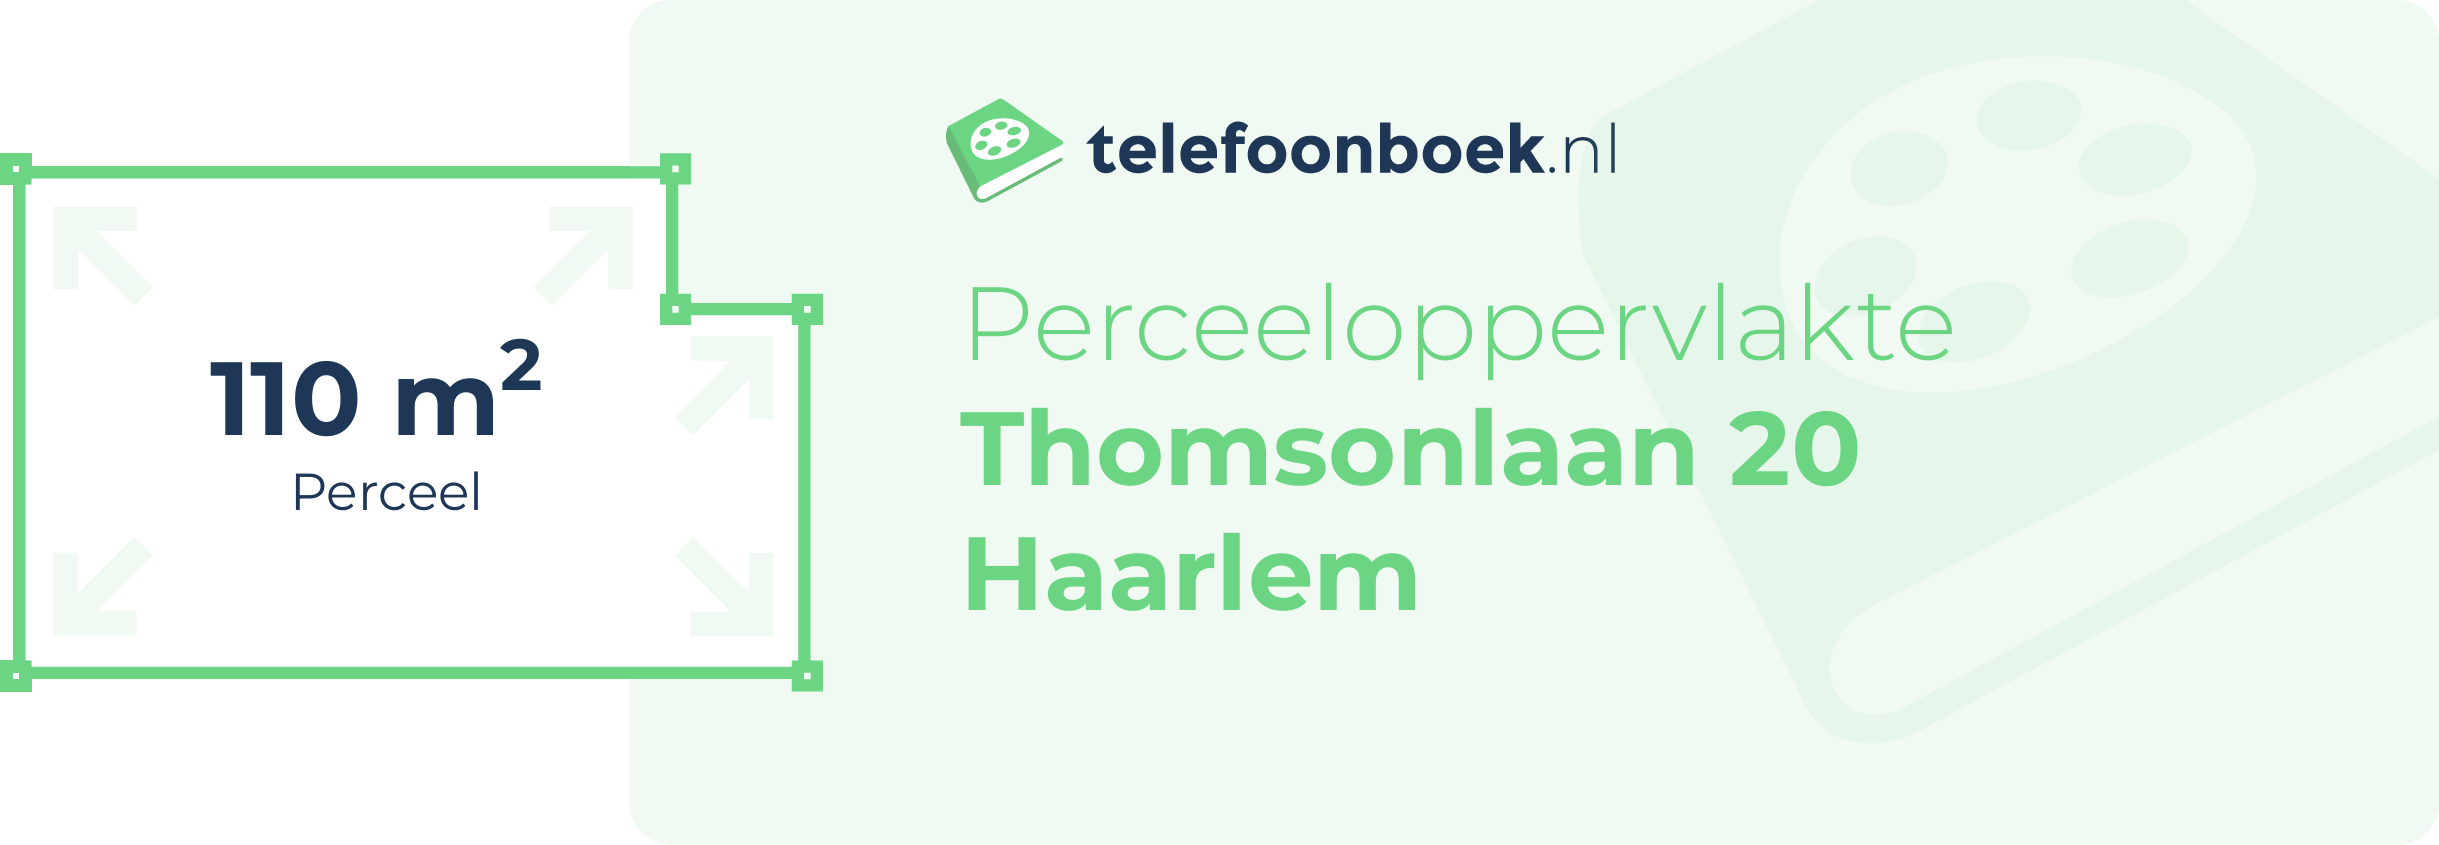 Perceeloppervlakte Thomsonlaan 20 Haarlem